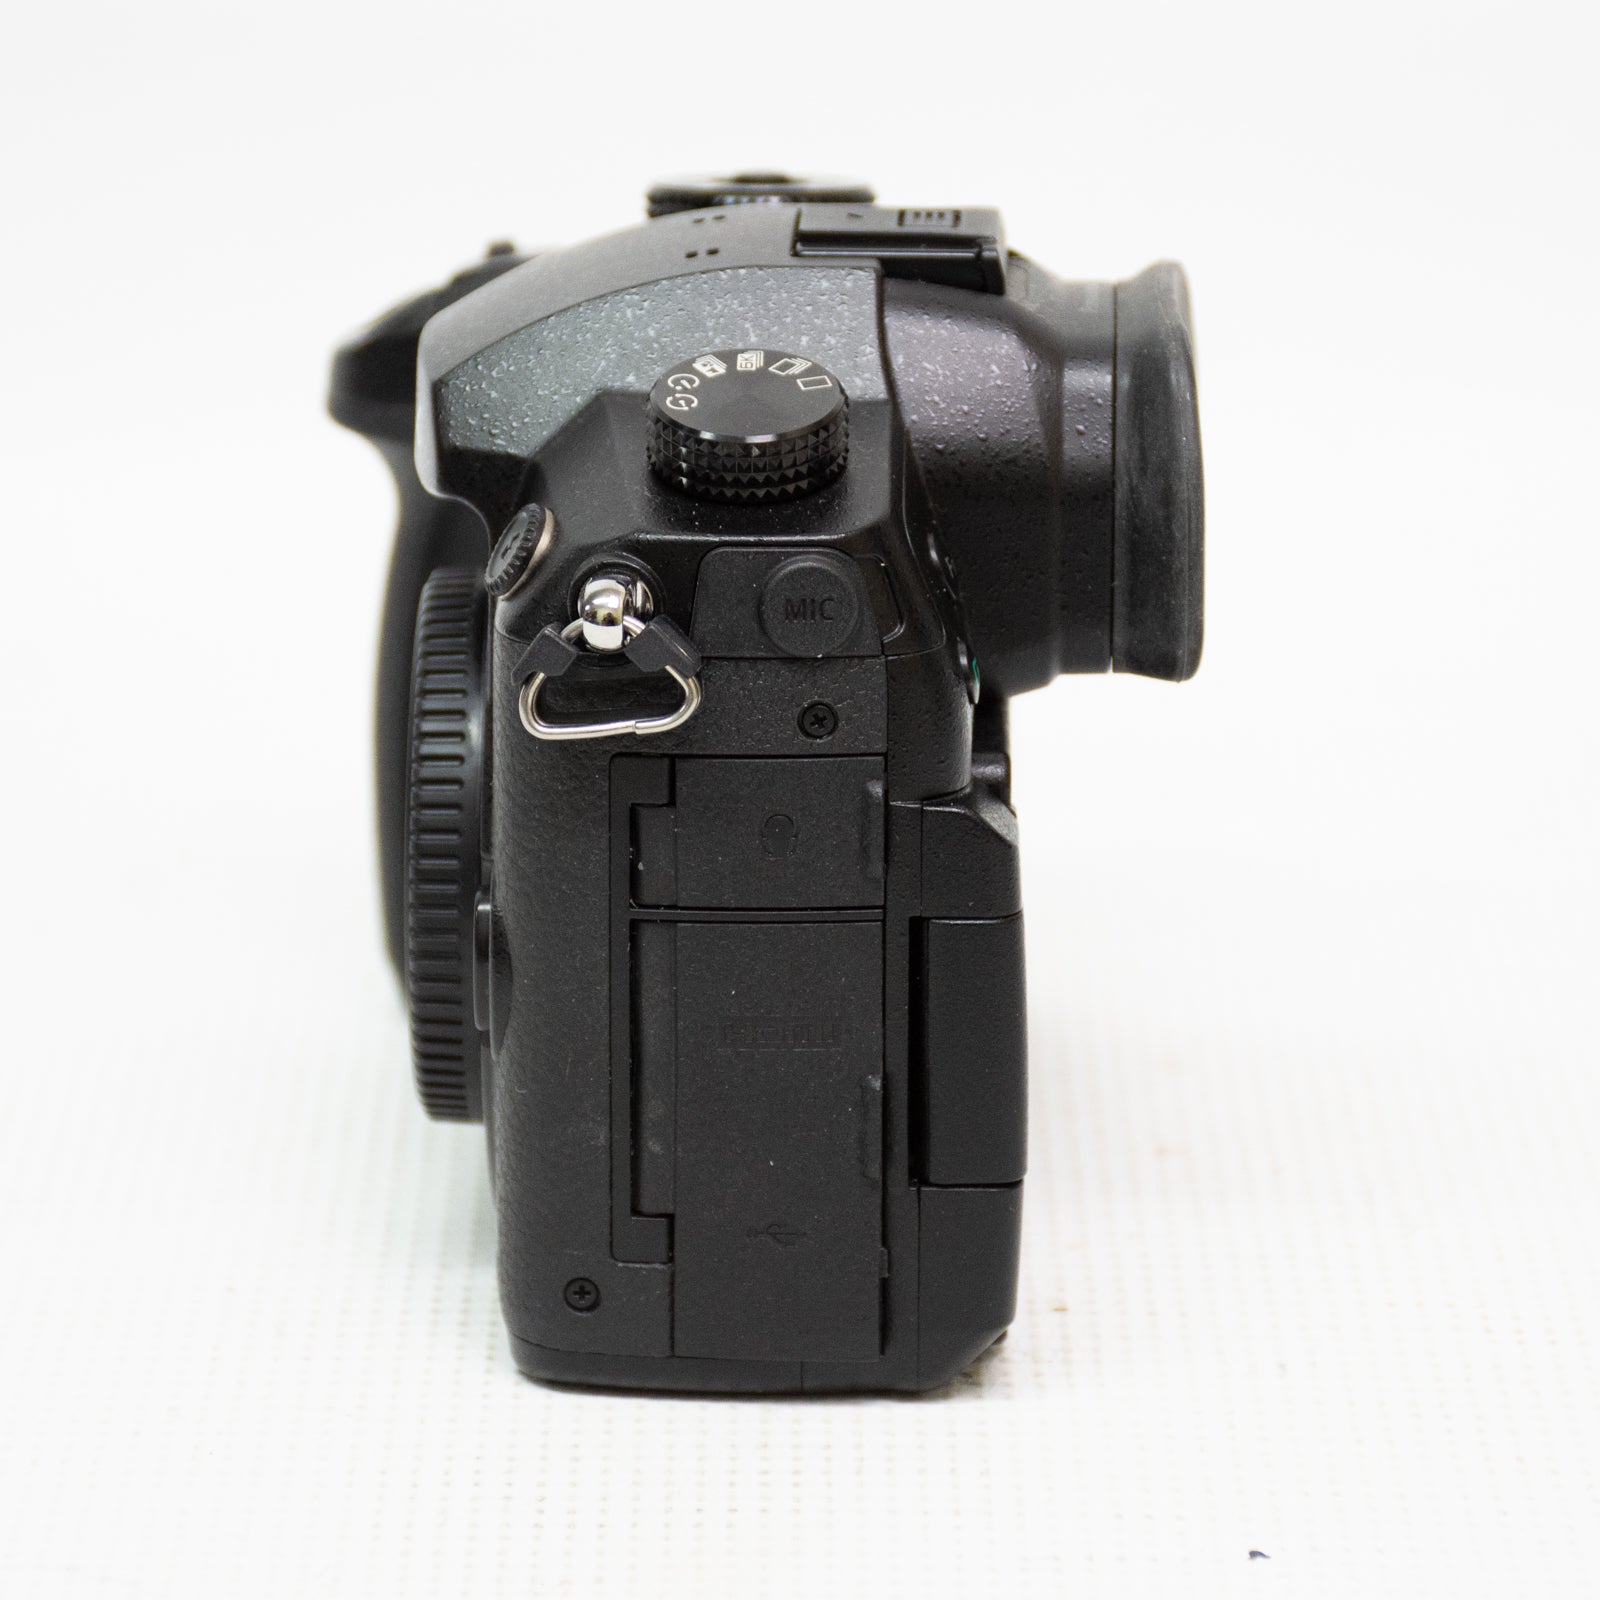 Panasonic LUMIX DC-GH5 20.3MP Mirrorless Digital Camera Bundle